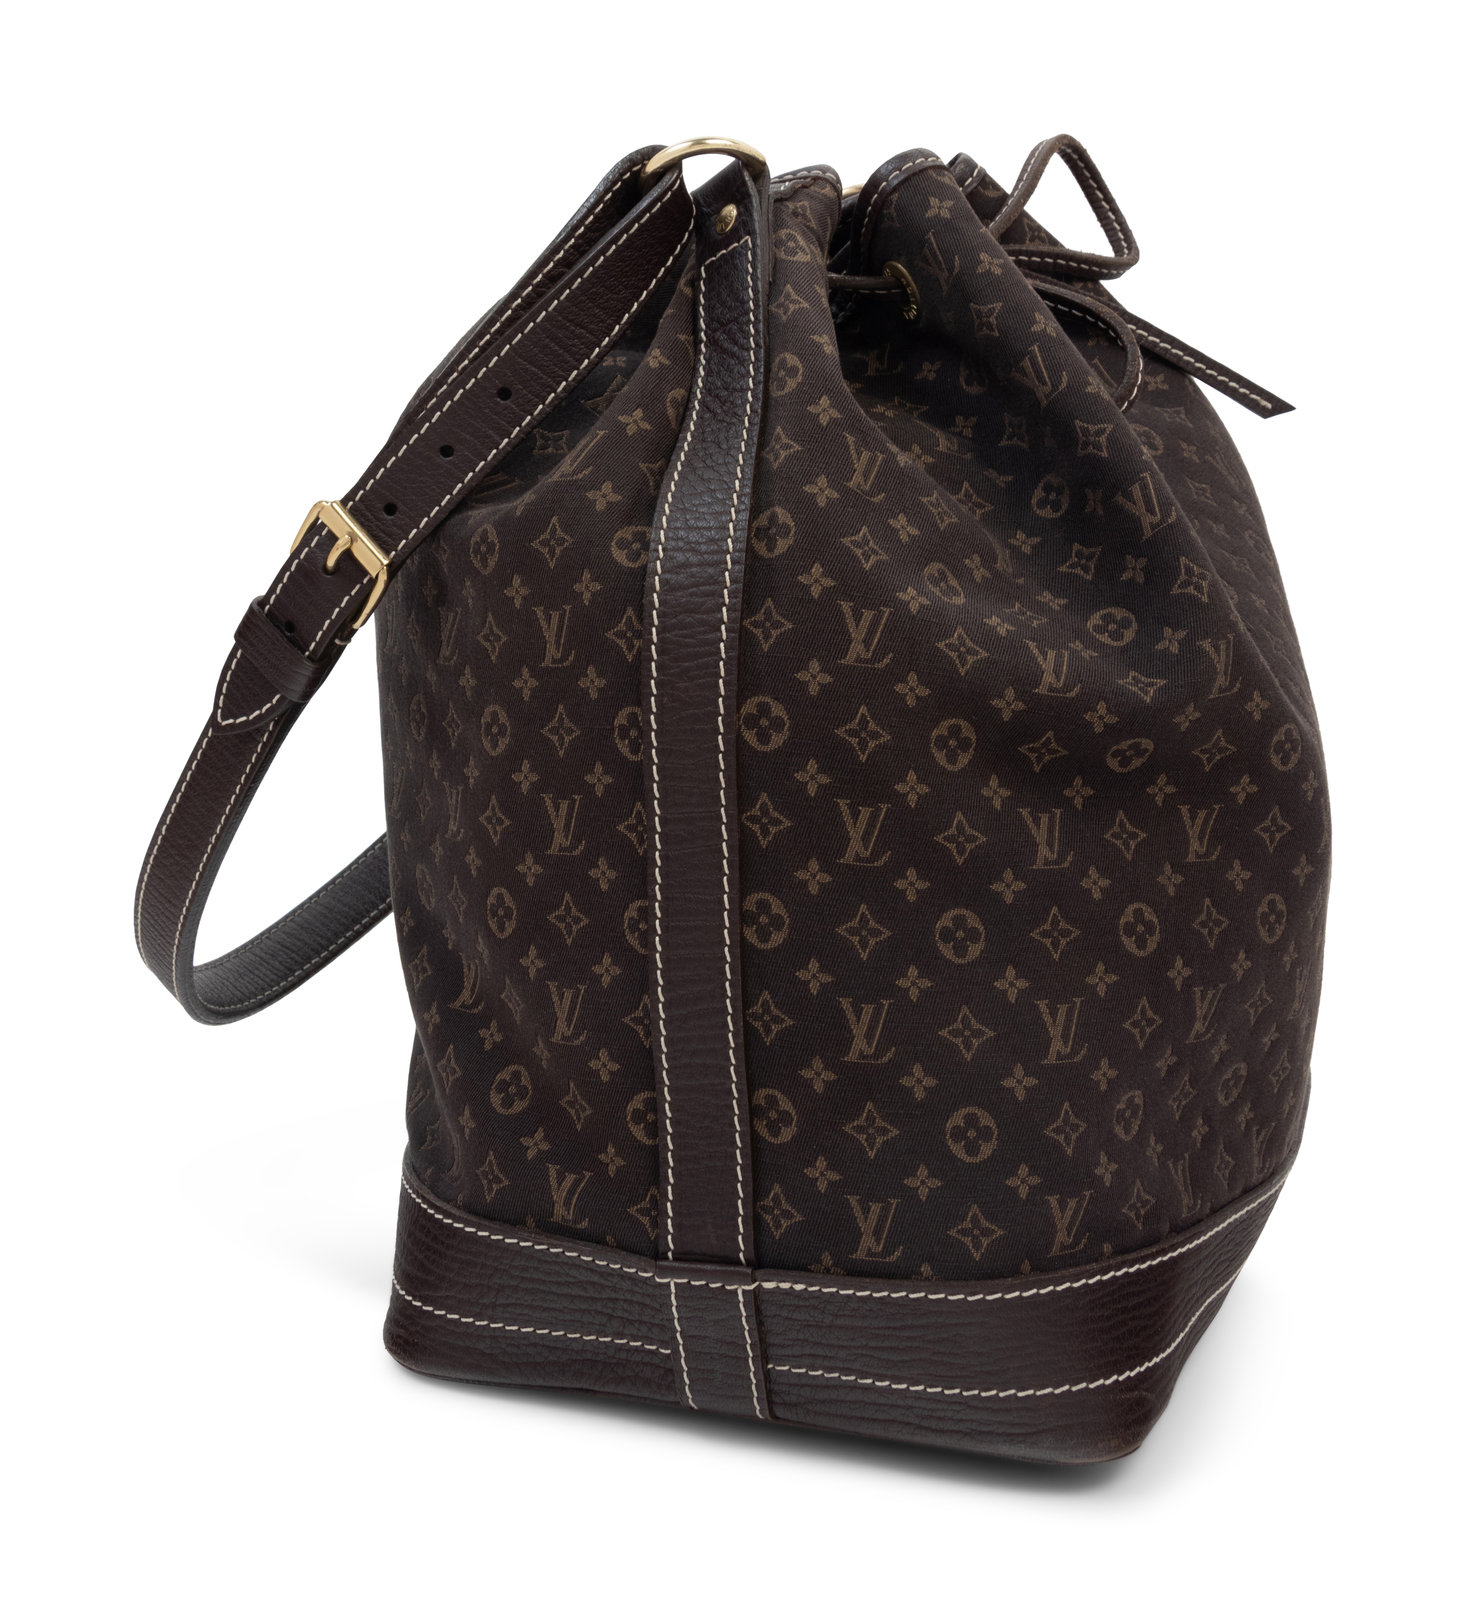 Sold at Auction: Louis Vuitton, Louis Vuitton Mini Noe Luois Vuitton handbag